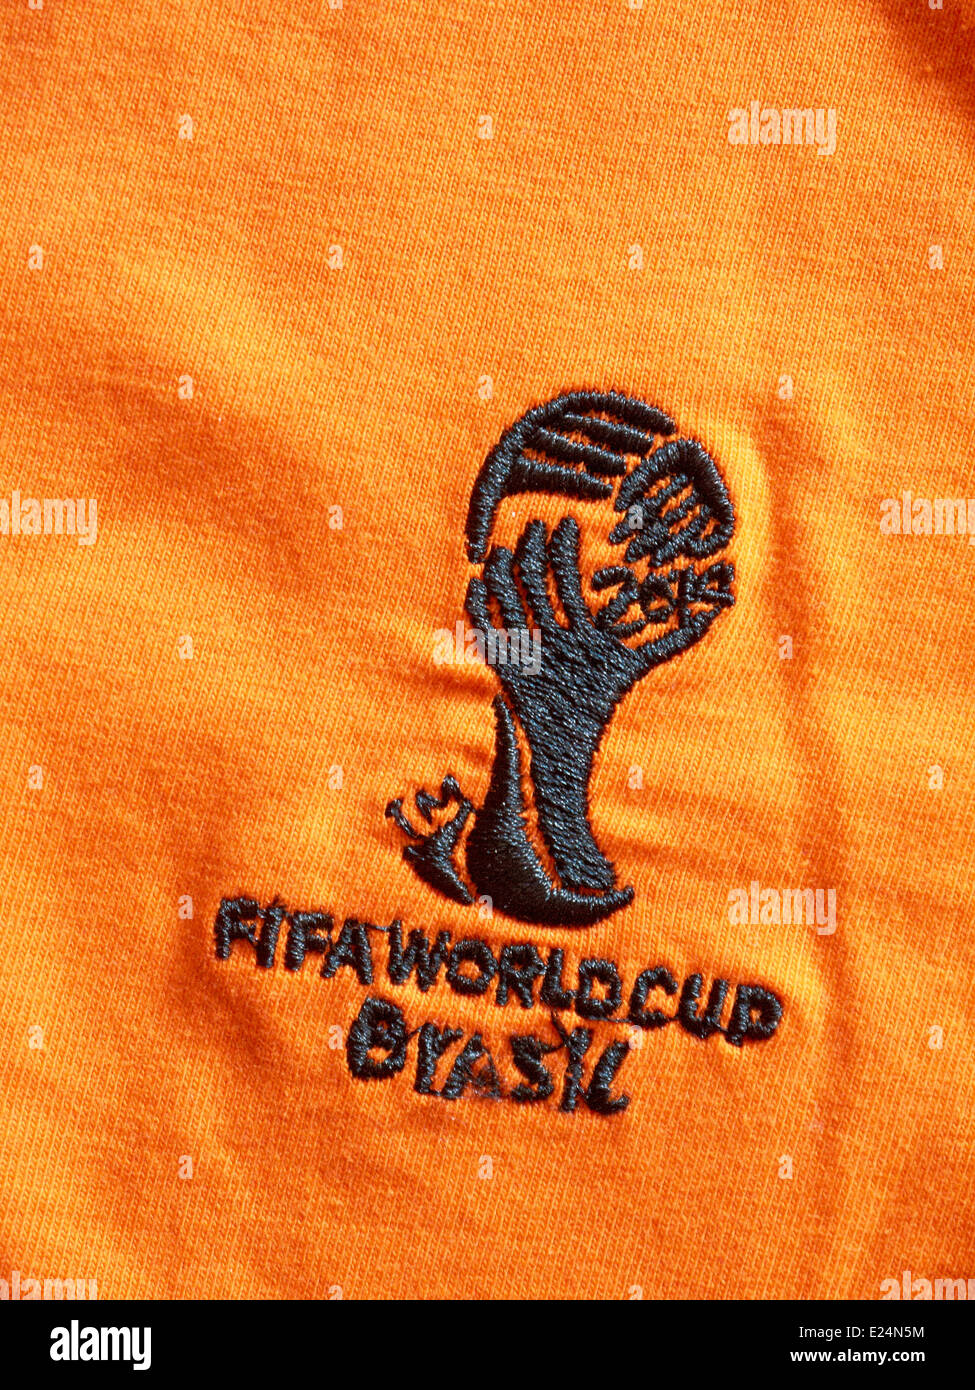 Dutch football shirt with Fifa World cup 2014 logo Stock Photo - Alamy